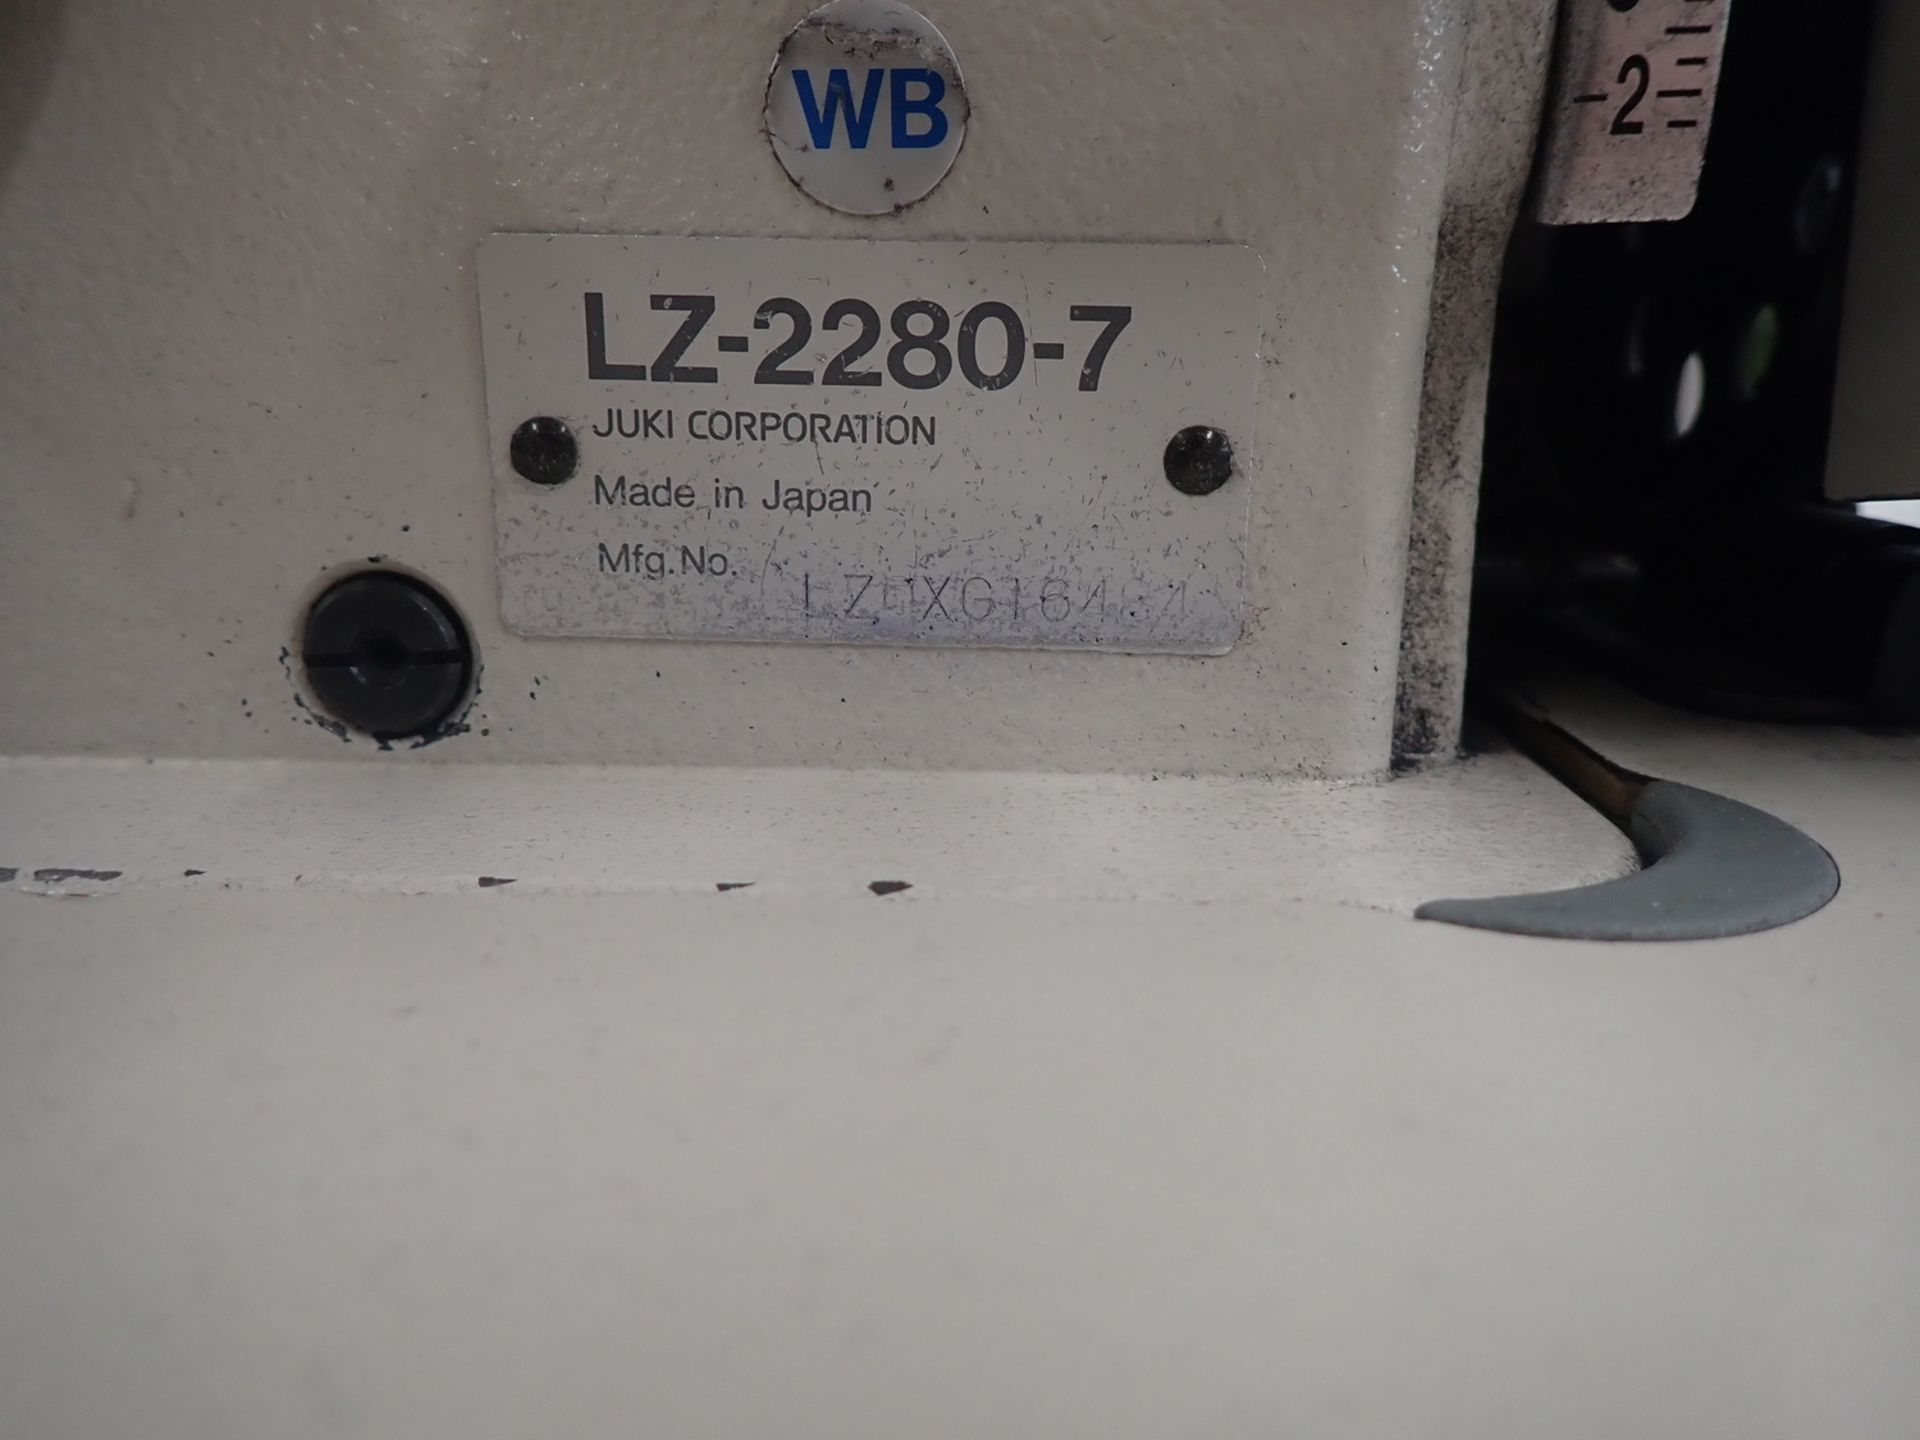 JUKI LZ-2280-7 ZIGZAG MACHINE LZOXG16484 W/ JUKI 130 CONTROLLER (220V) - Image 7 of 12